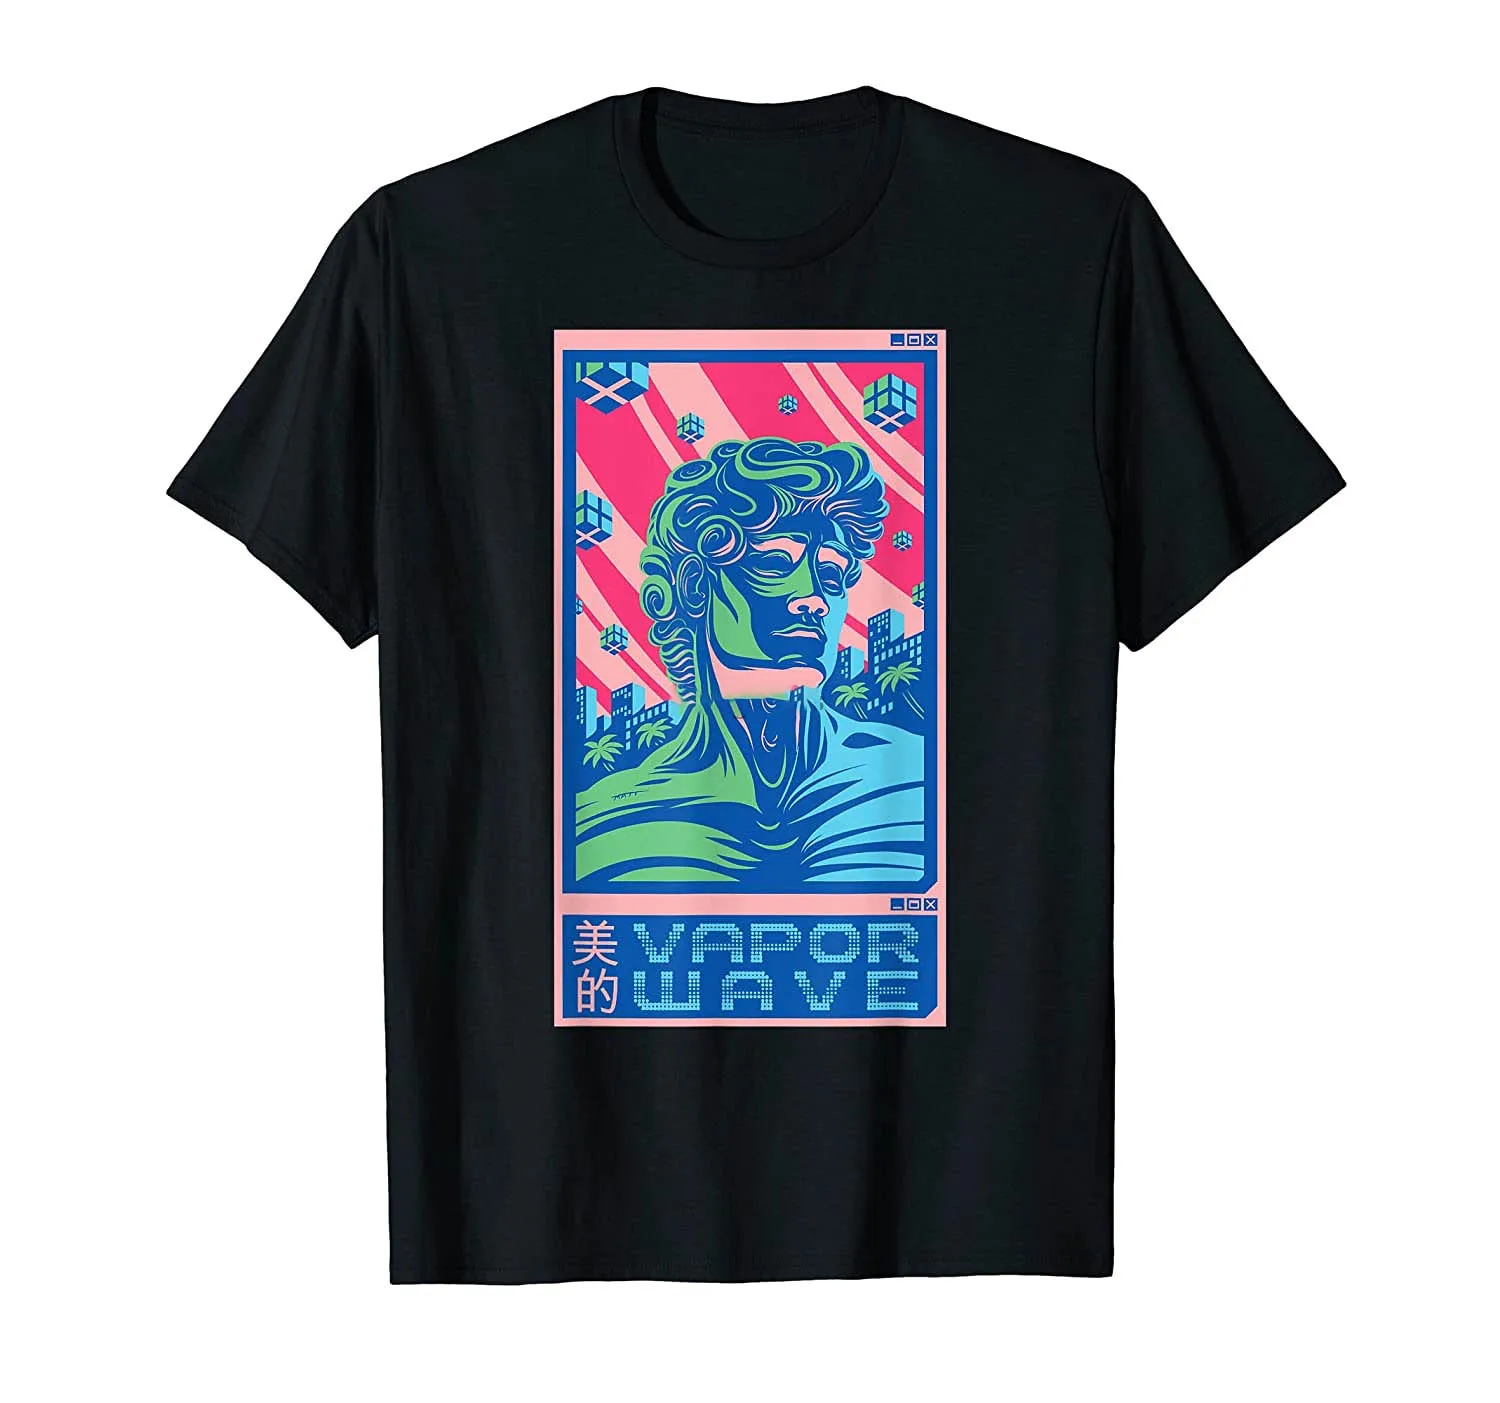 Vaporwave Shirt - Aesthetic Harajuku - Retro 80s Vaporwave T-Shirt Men Cotton Tshirt Tees Tops Anime Harajuku Streetwear